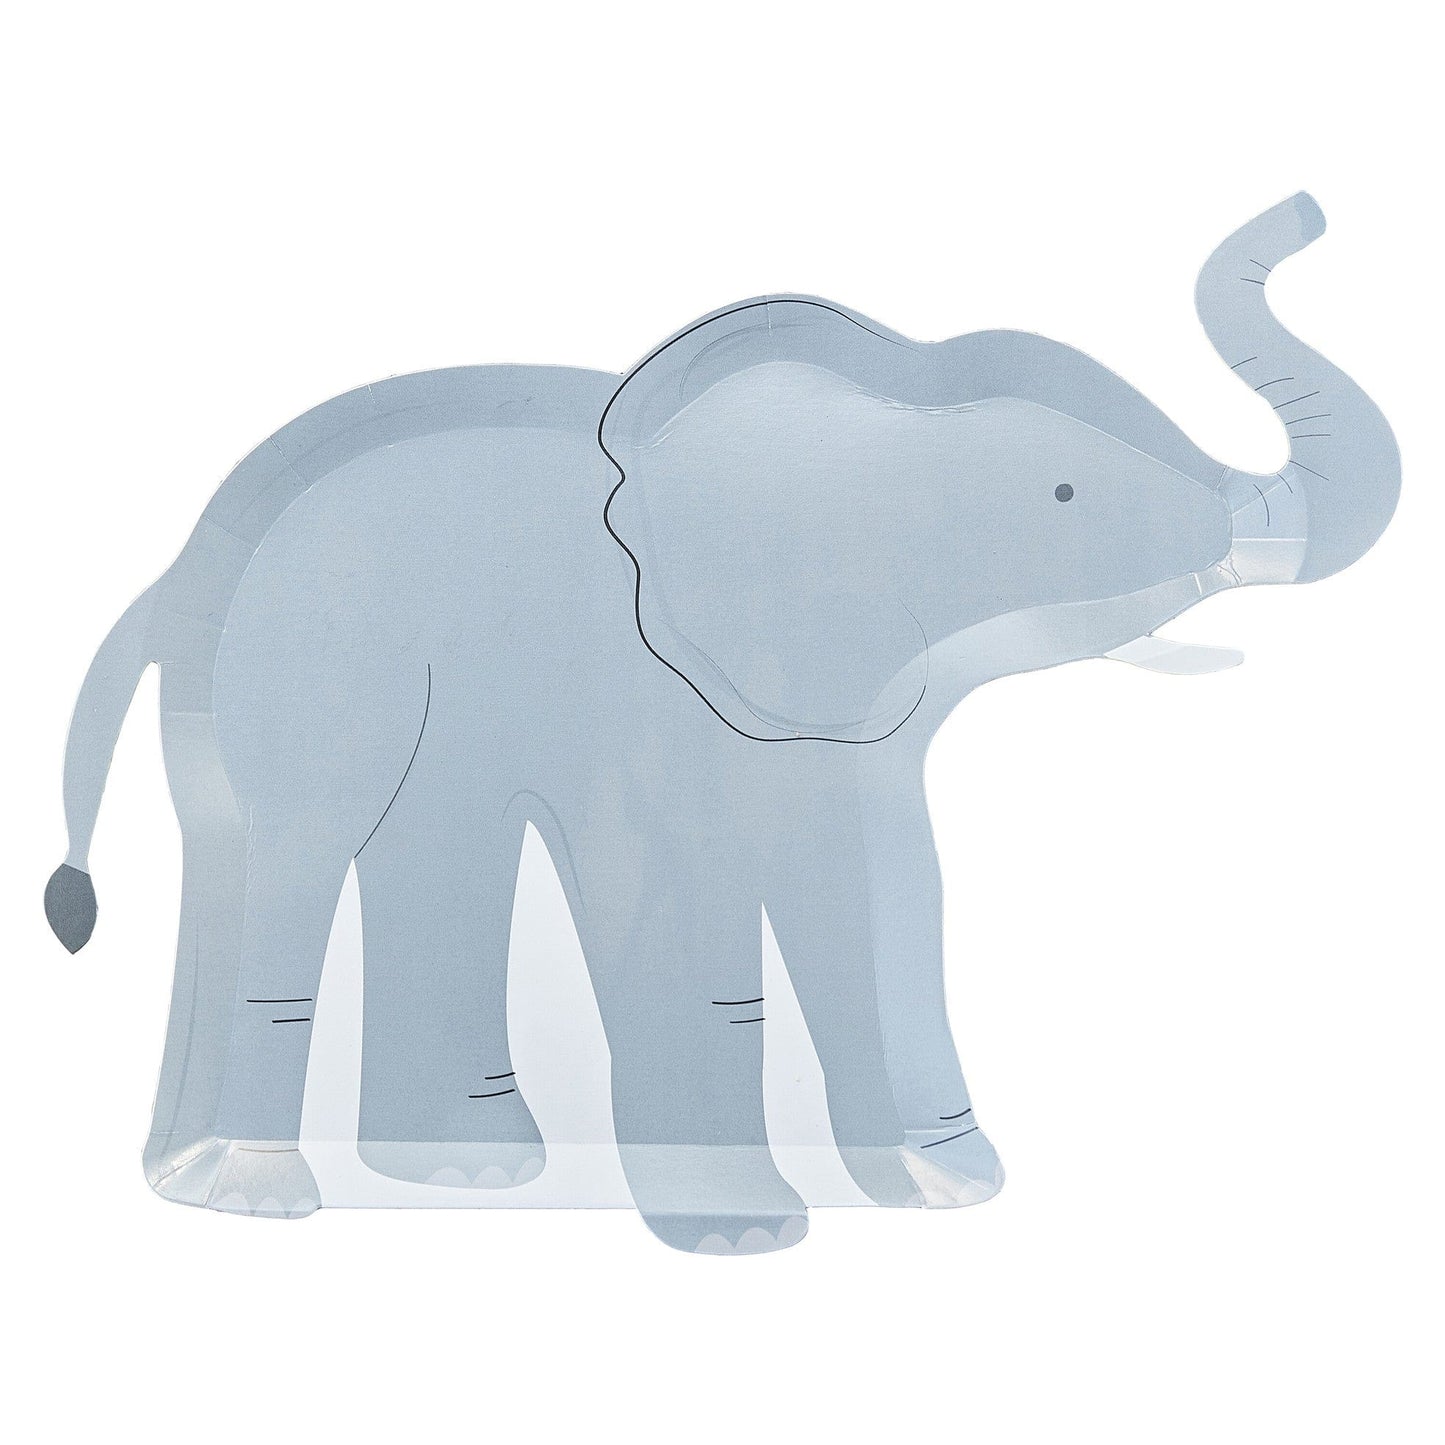 Elephant Shape Plates | Elephant Party Supplies | Ginger Ray UK Ginger Ray